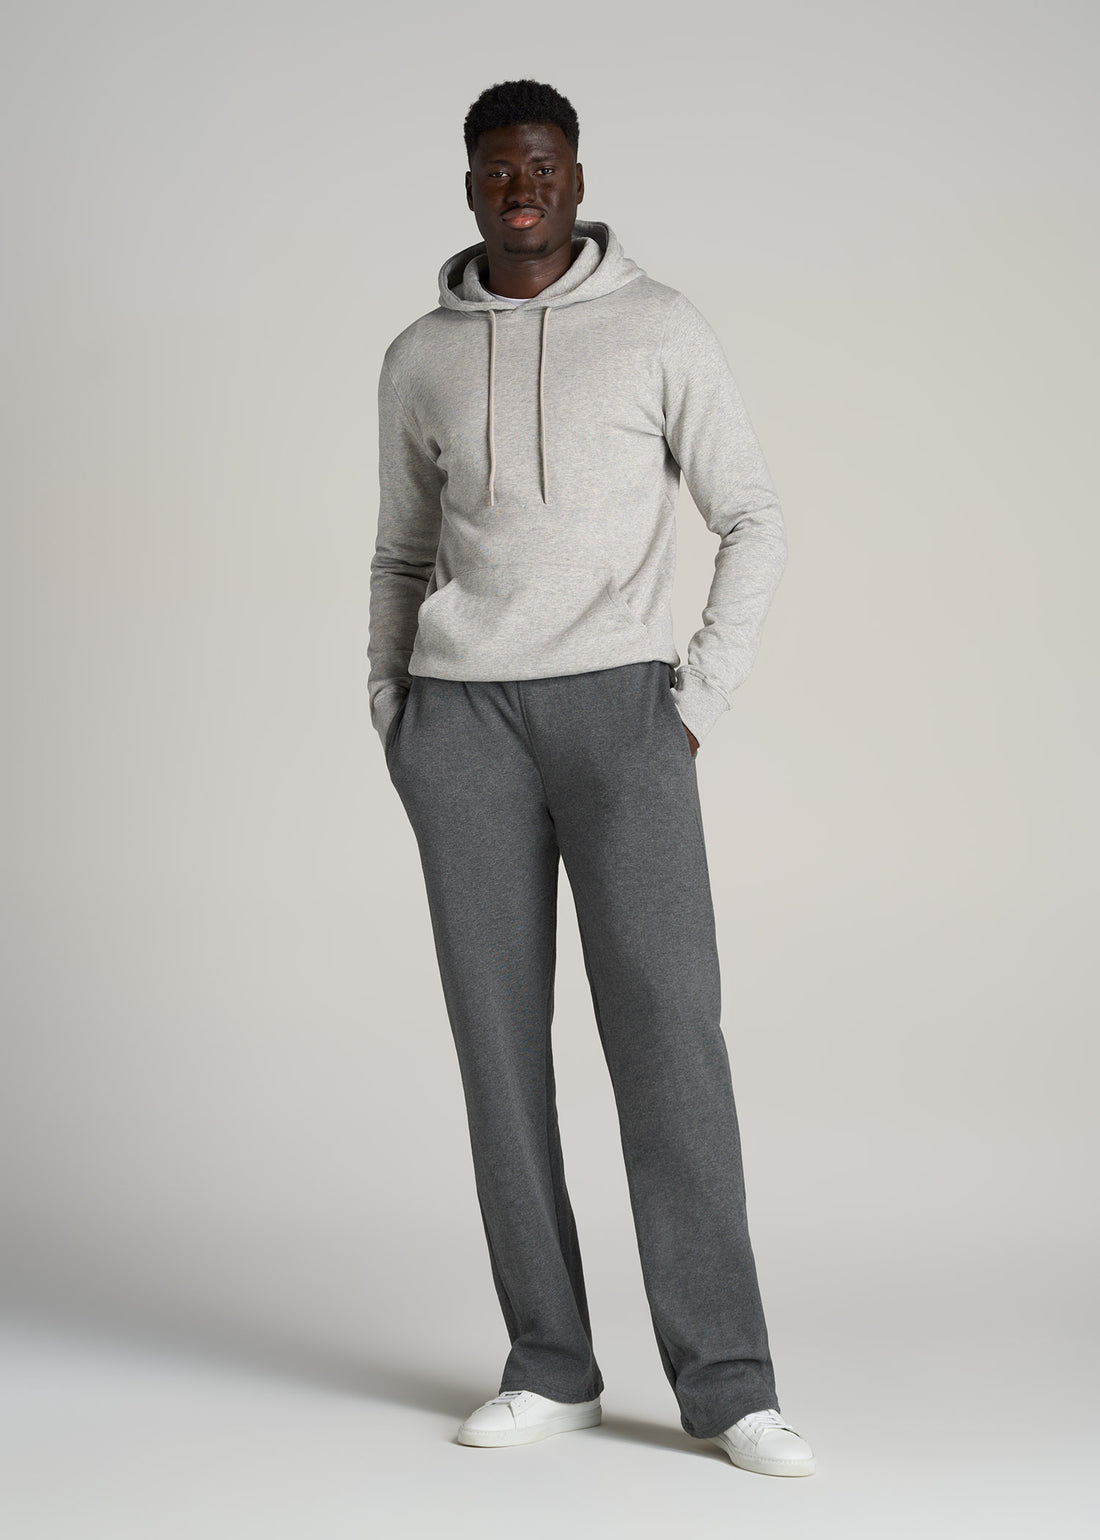 Men's Tall Fleece Open Sweatpants Charcoal | American Tall